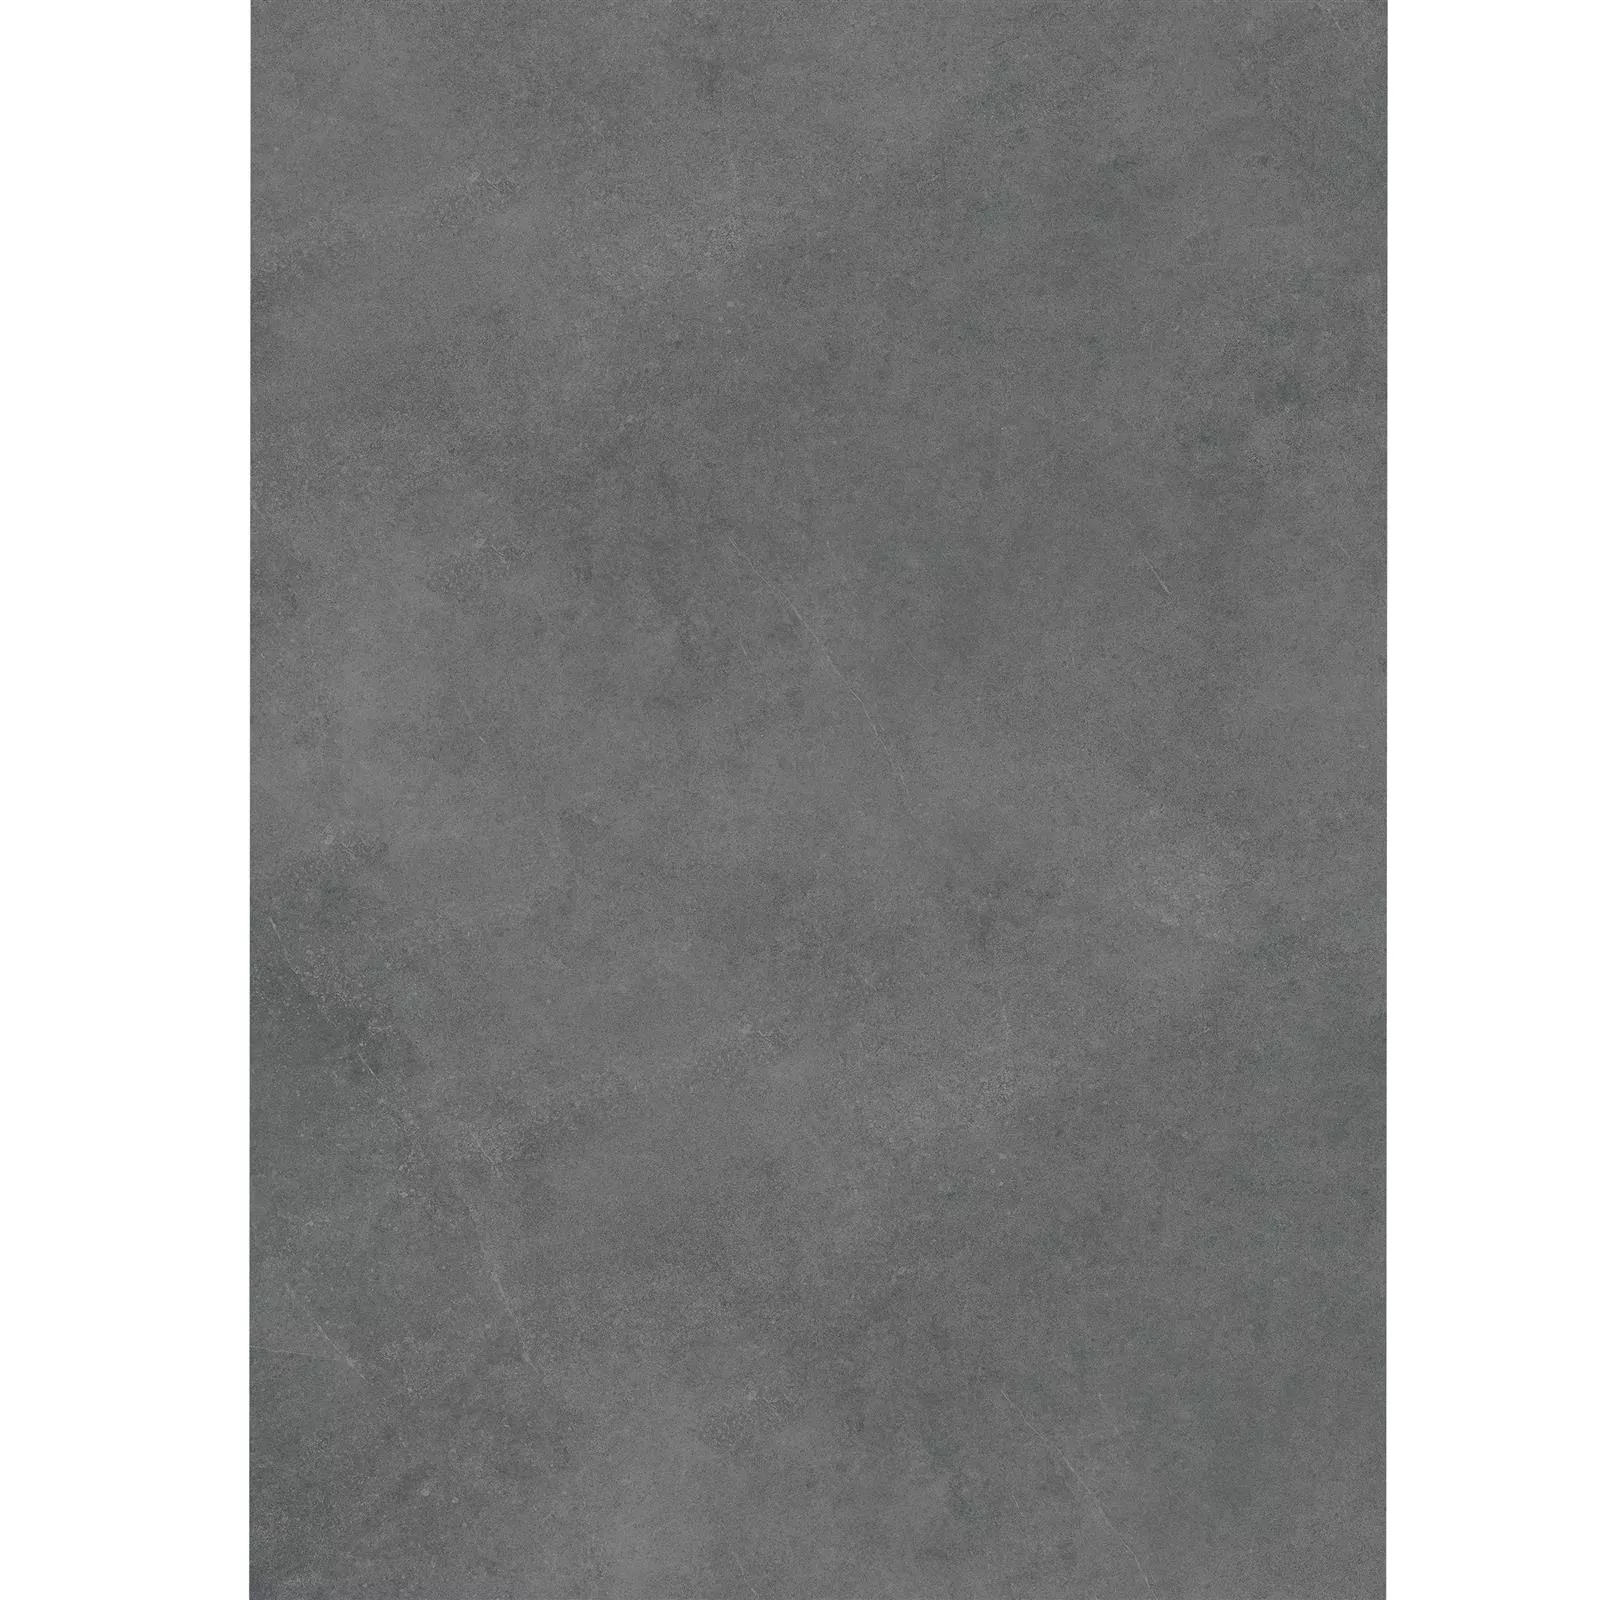 Terrastegels Cement Optic Glinde Antraciet 60x120cm